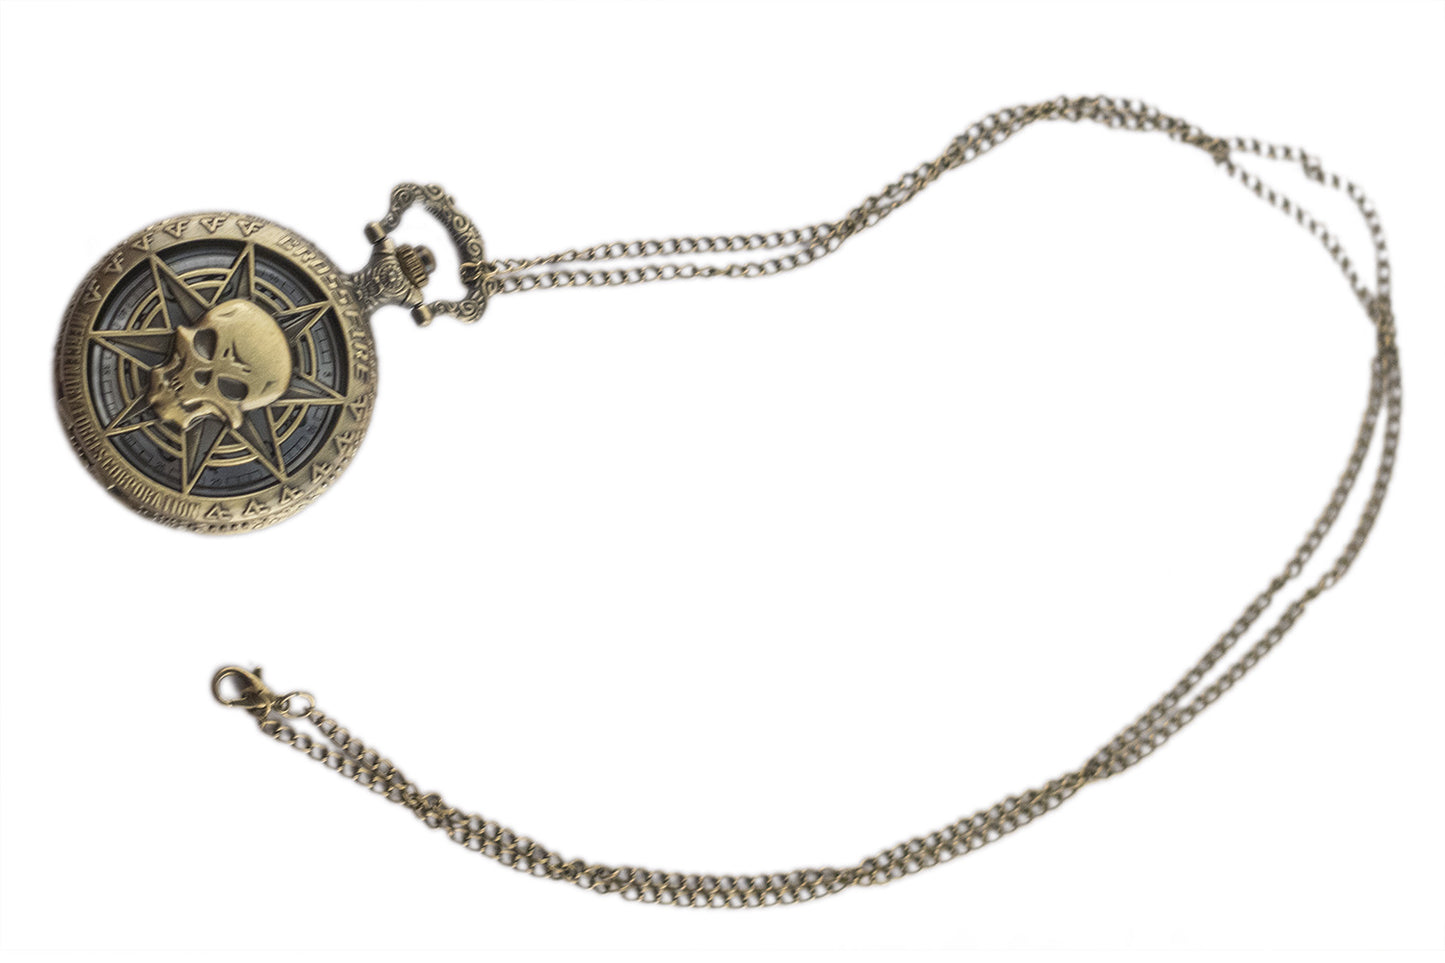 Vintage Necklace Quartz Pocket Watch for Men and Women Chain Watch